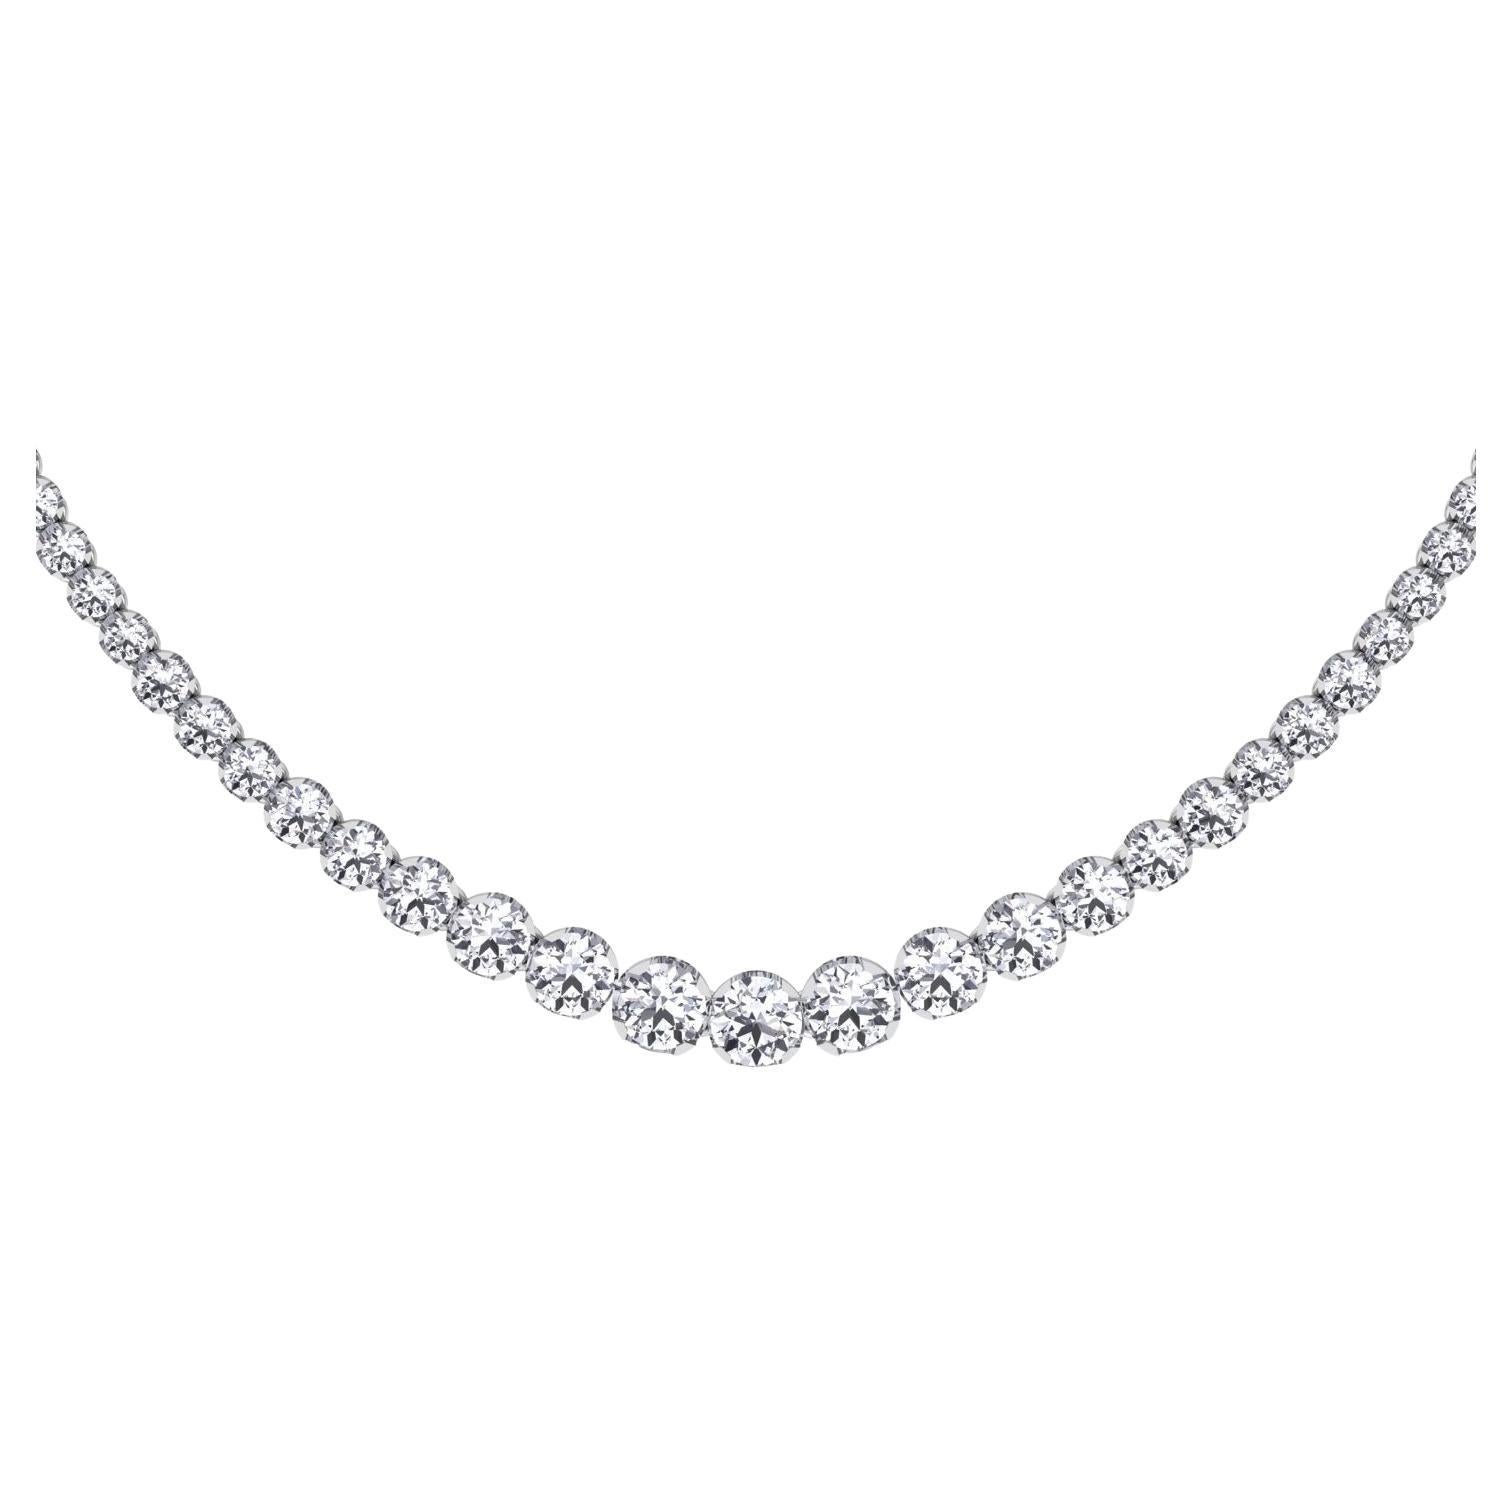 Gem Jewelers Co. 10.23 Carat Graduated Diamond Tennis Necklace in 14K White Gold